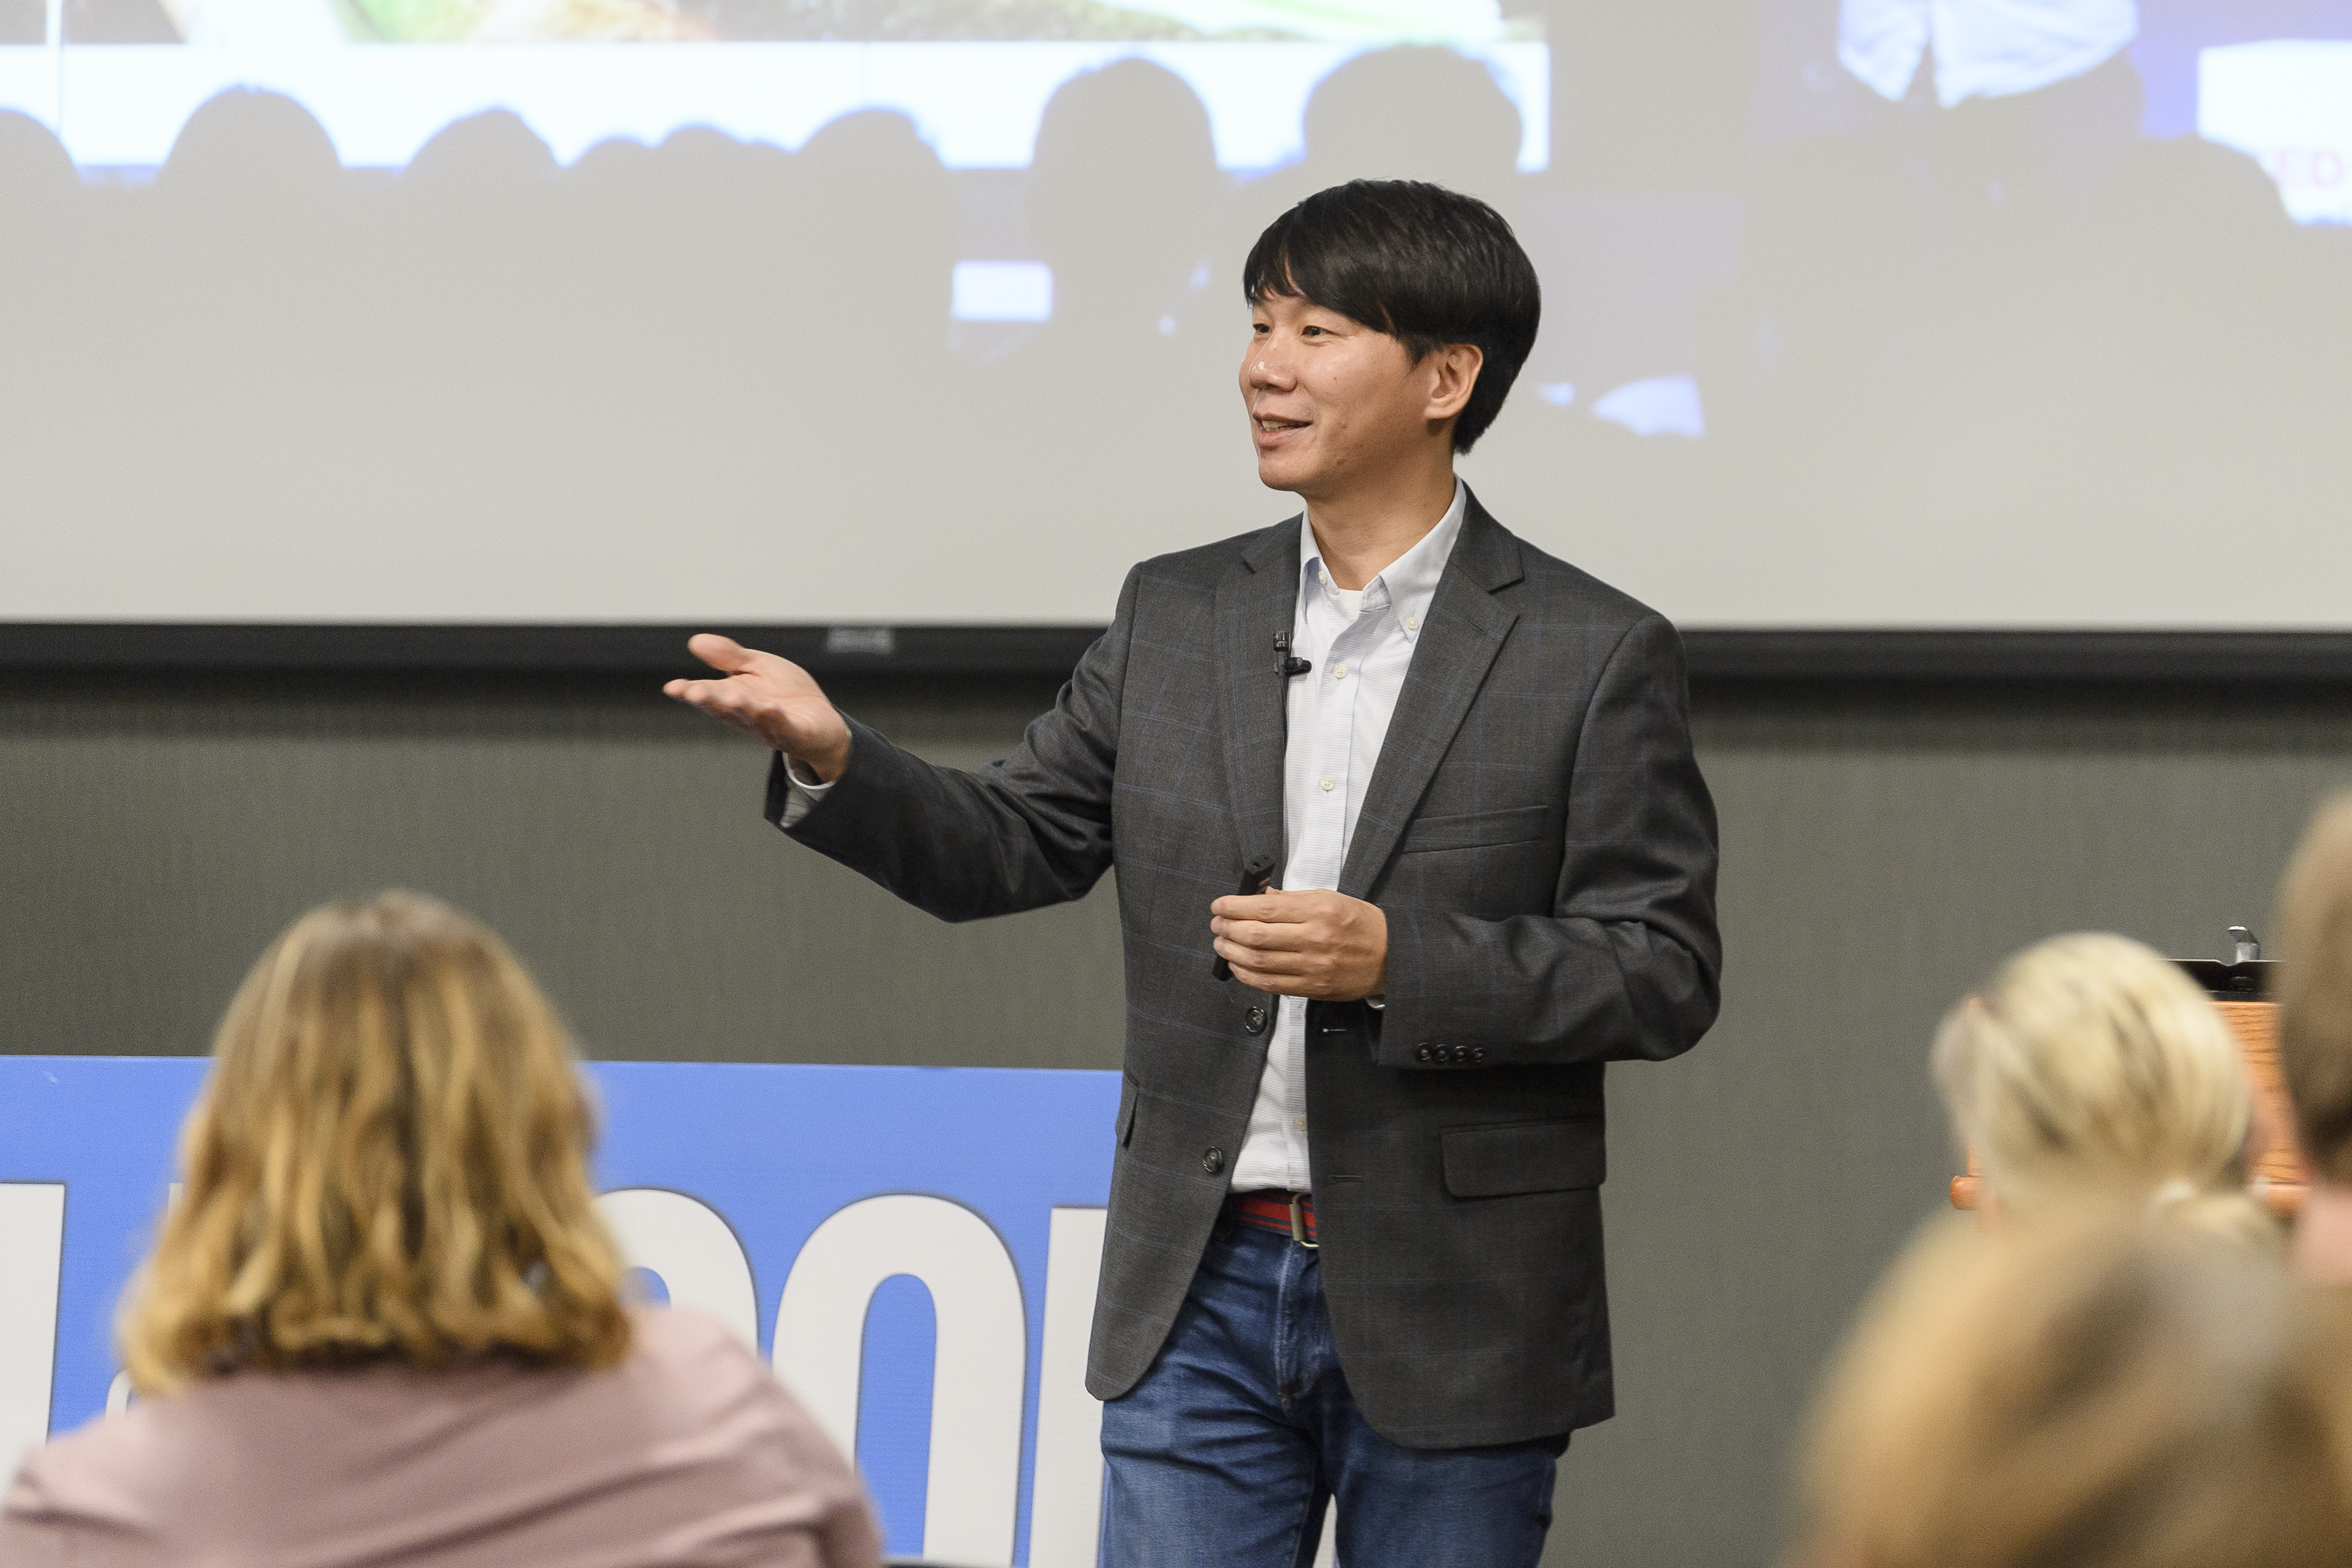 Tong Jin Kim, Associate Professor of Industrial Design, College of Liberal Arts, "Maker space, micro manufacturing, maker education movements: Designing community platforms"